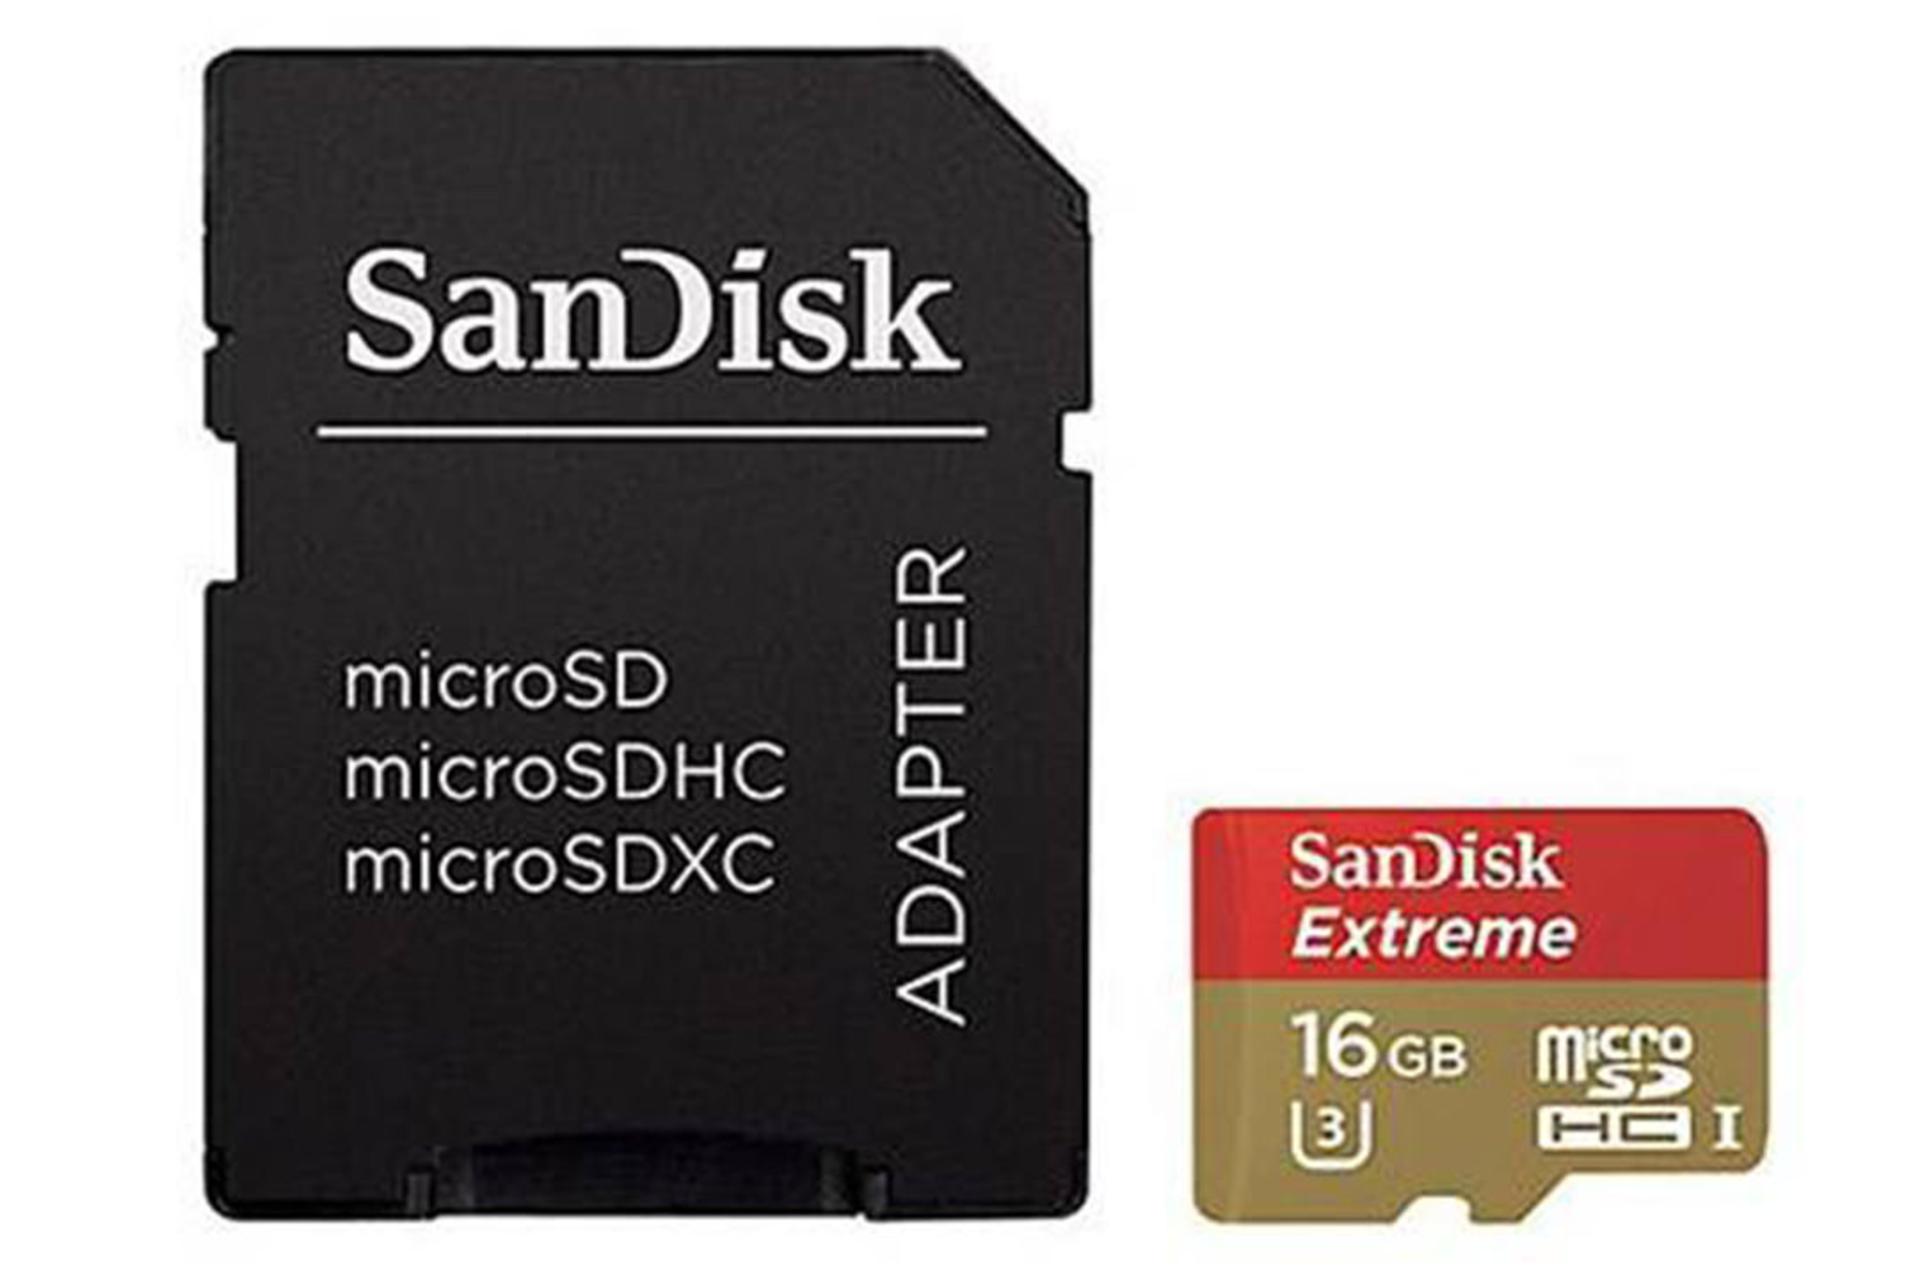 SanDisk Extreme microSDHC Class 10 UHS-I U3 16GB